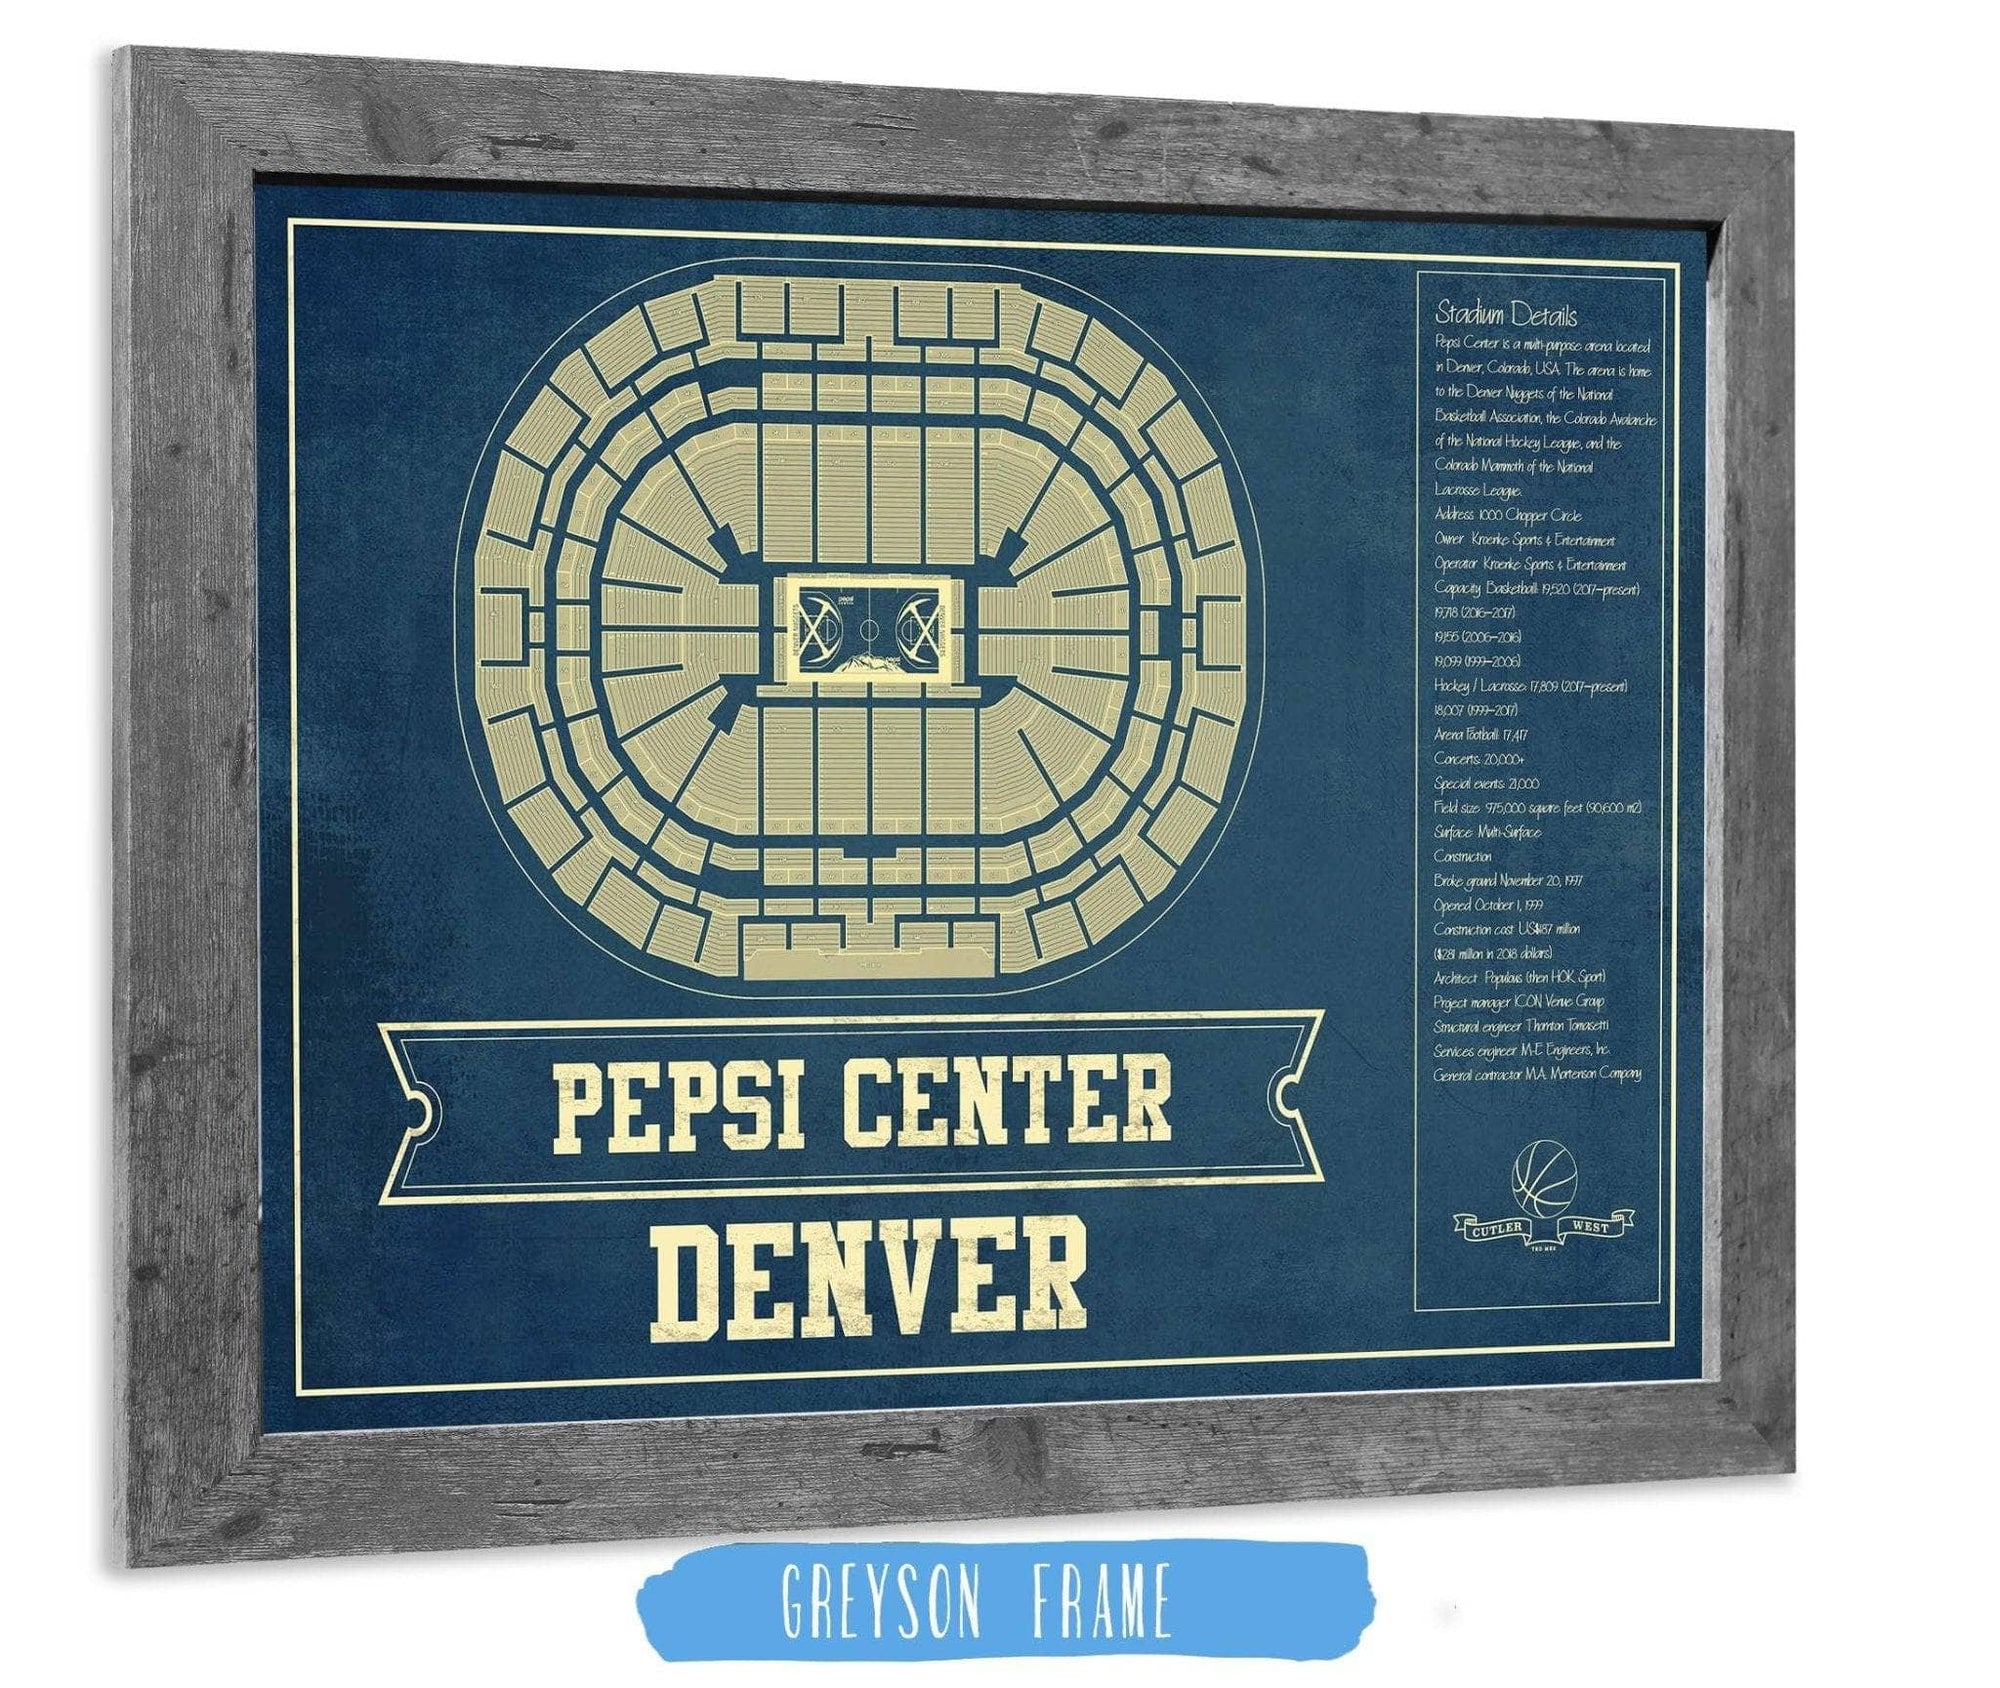 Cutler West Basketball Collection 14" x 11" / Greyson Frame Denver Nuggets Pepsi Center Vintage Basketball Blueprint NBA Print 933350163_76240